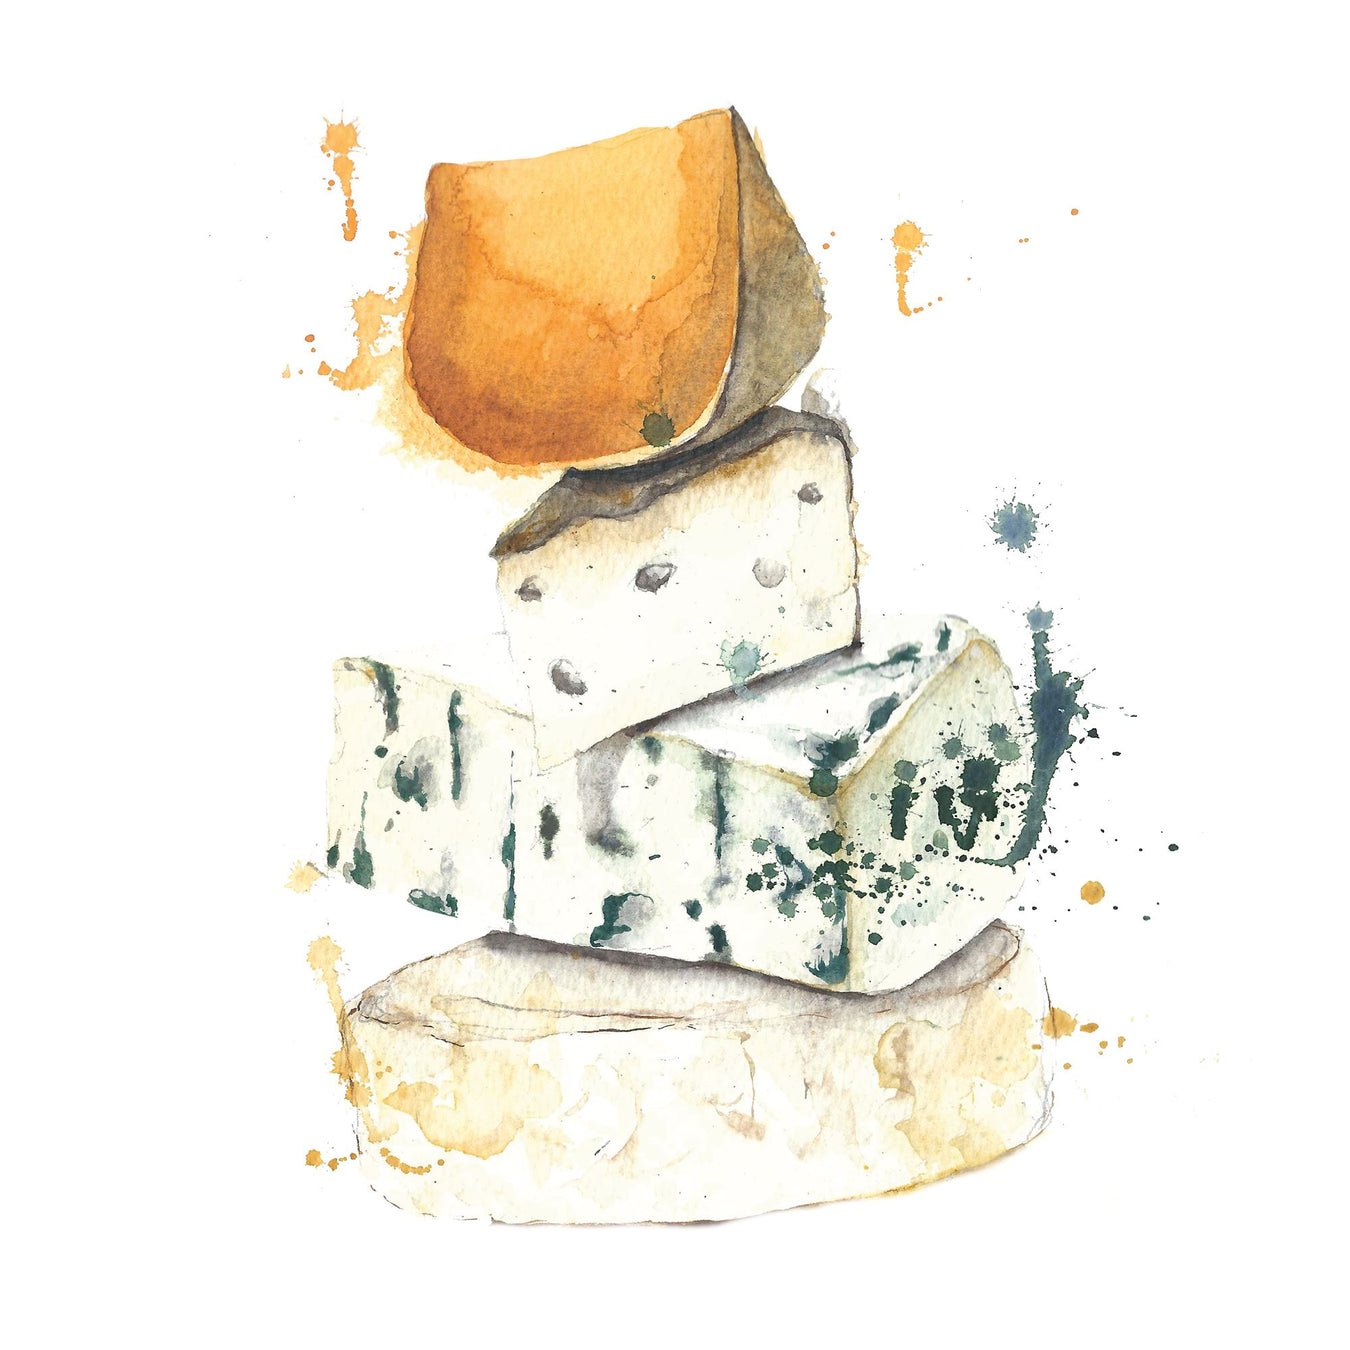 Italian Cheese